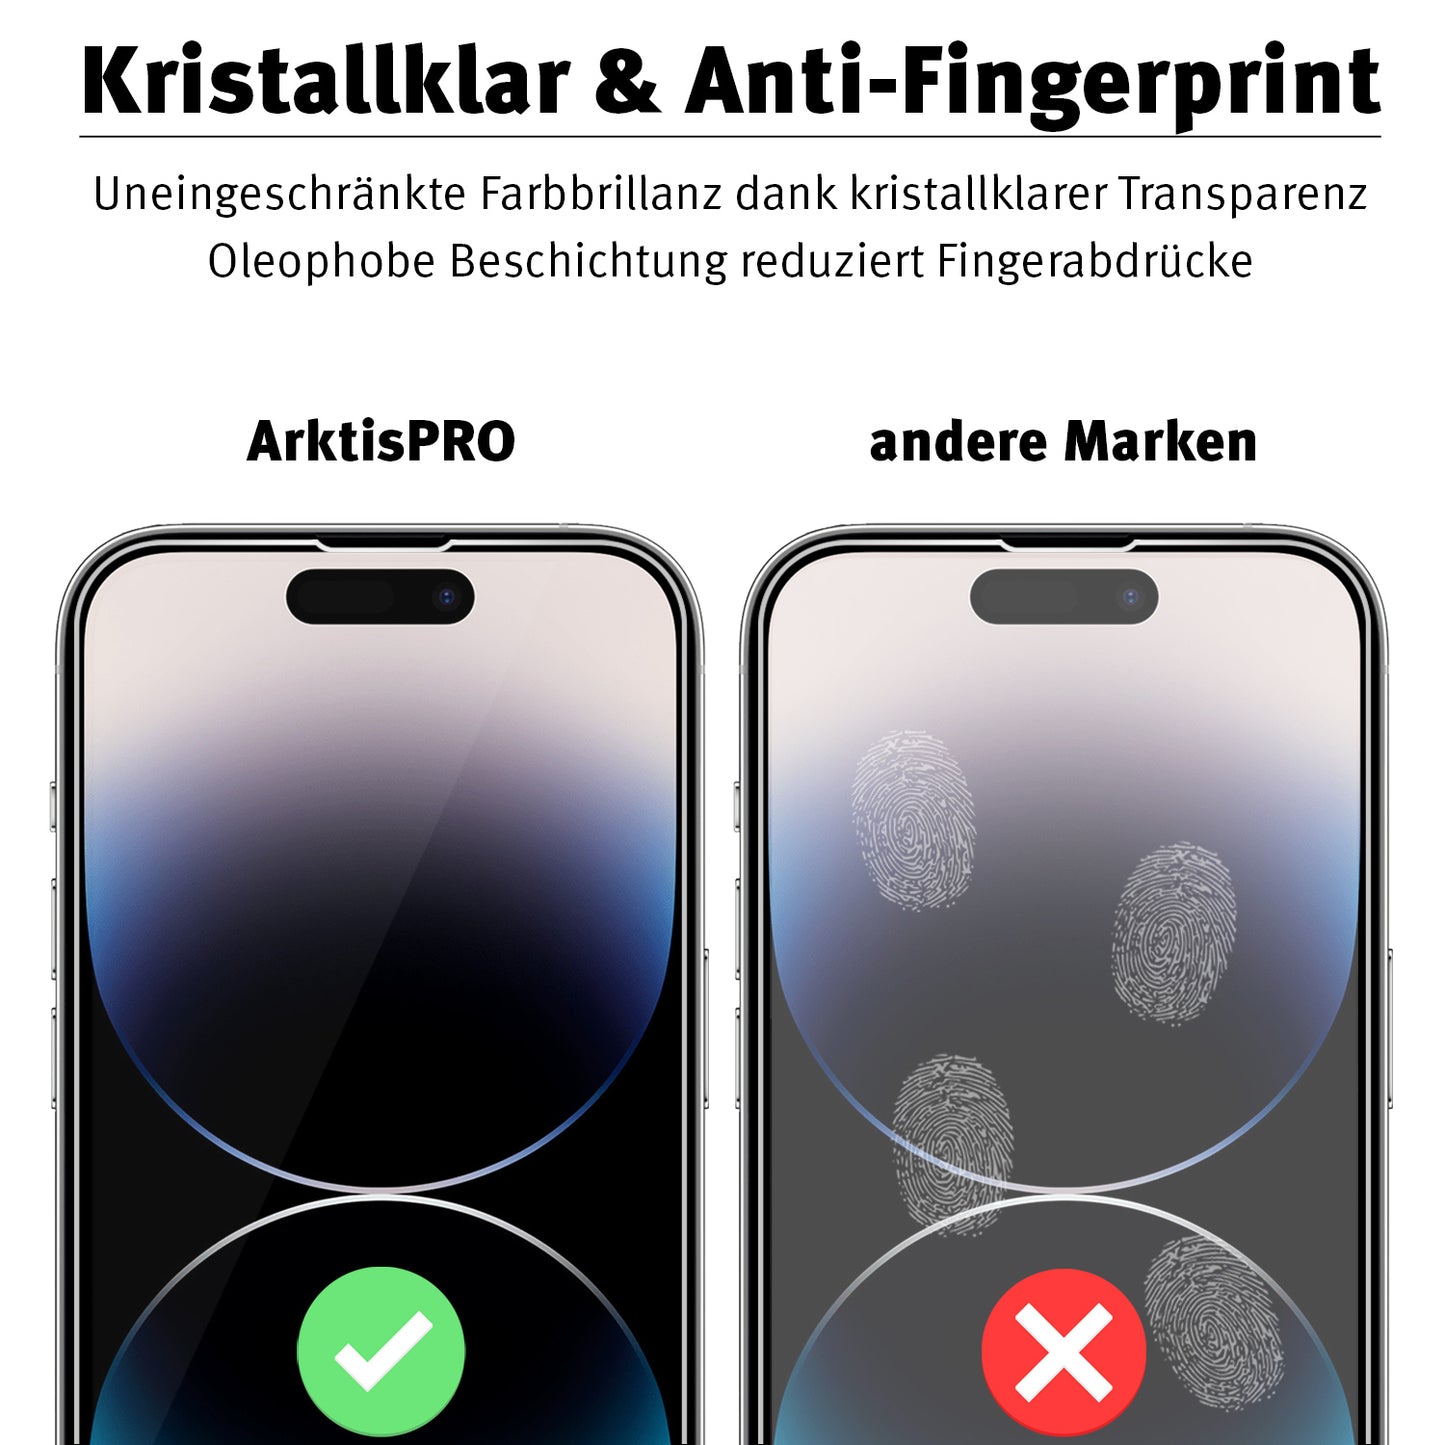 ArktisPRO iPhone 14 Pro Max Displayschutz GLAS - 3er Set